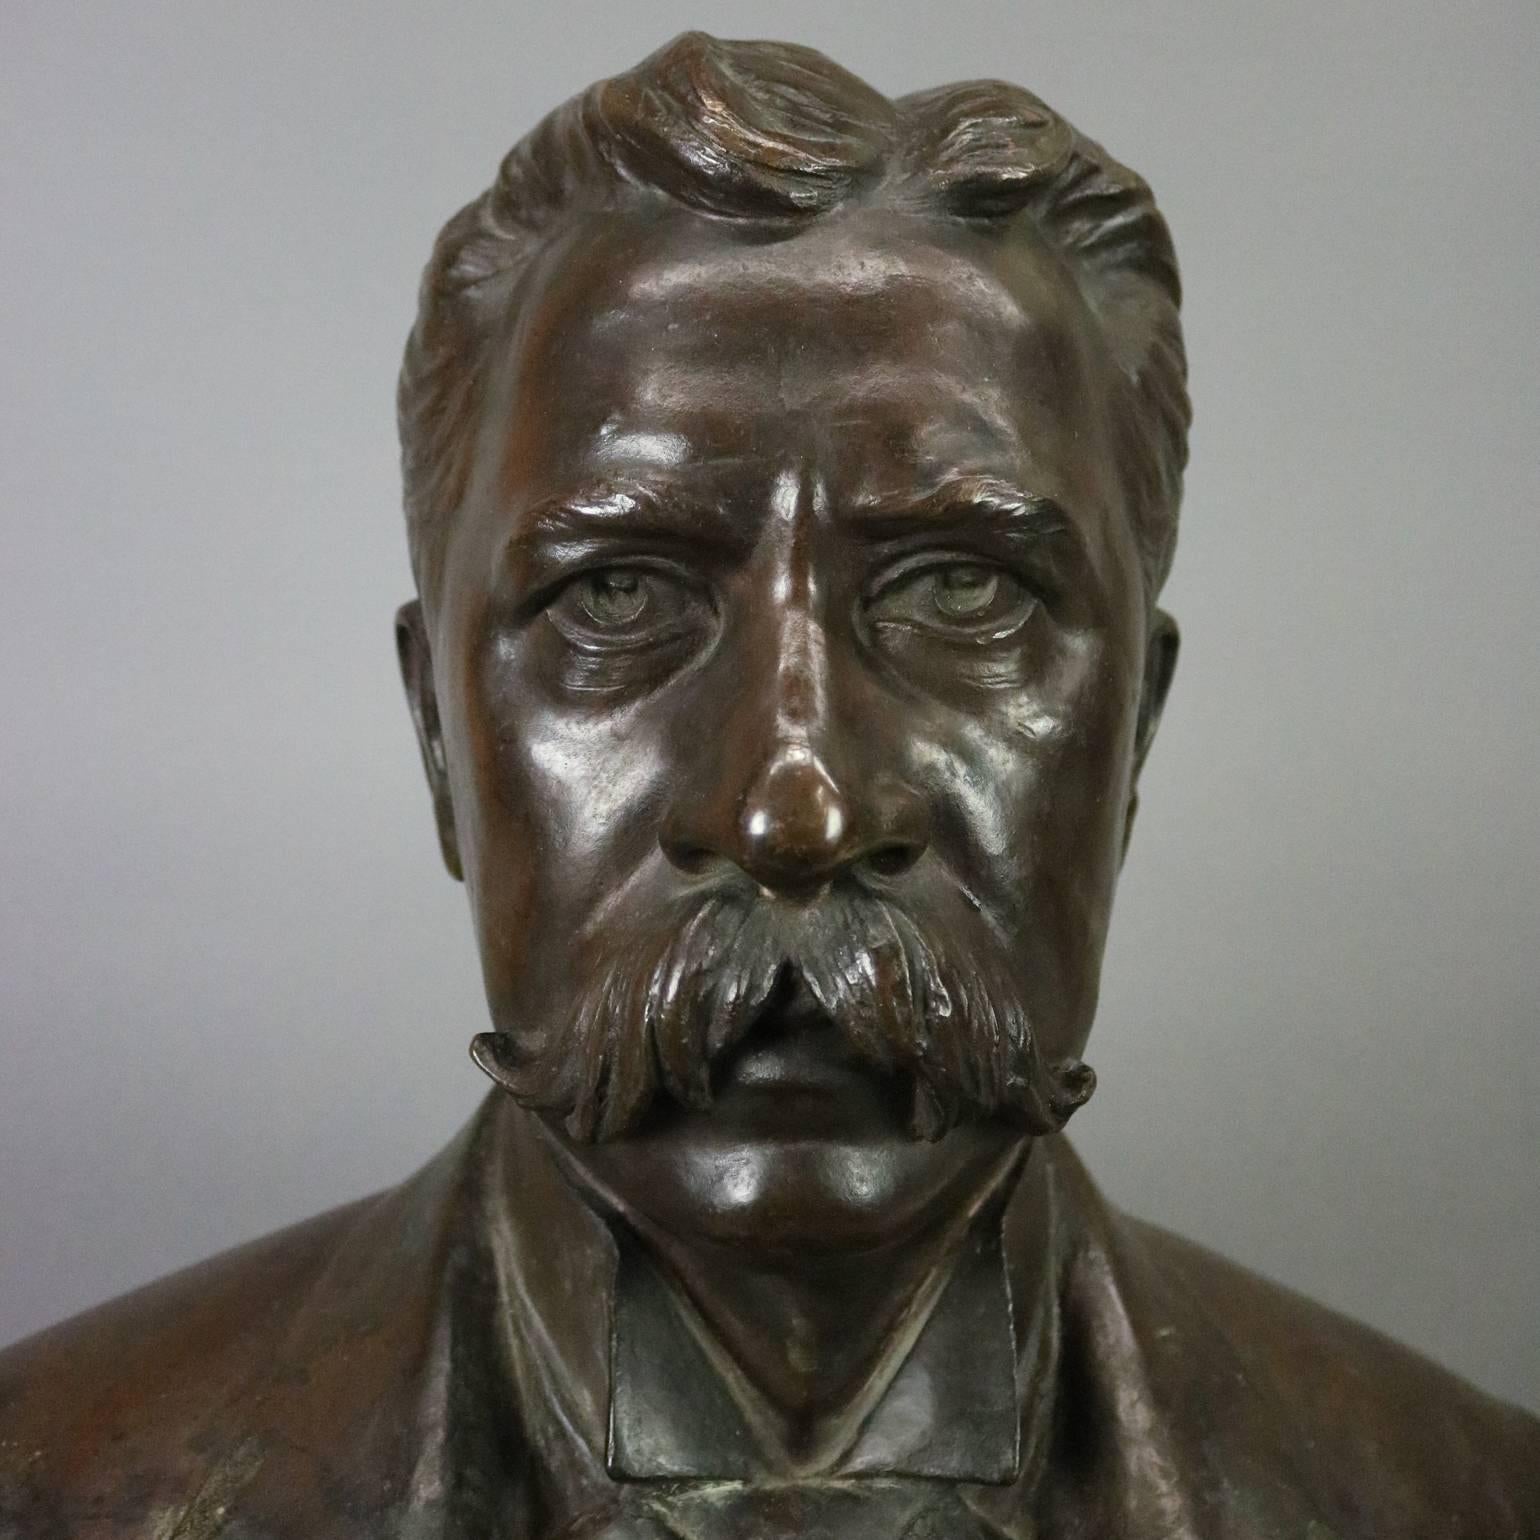 Cast Antique 3/4 Bronze Bust of Teddy Roosevelt by B. Feinberg, New York, circa 1890